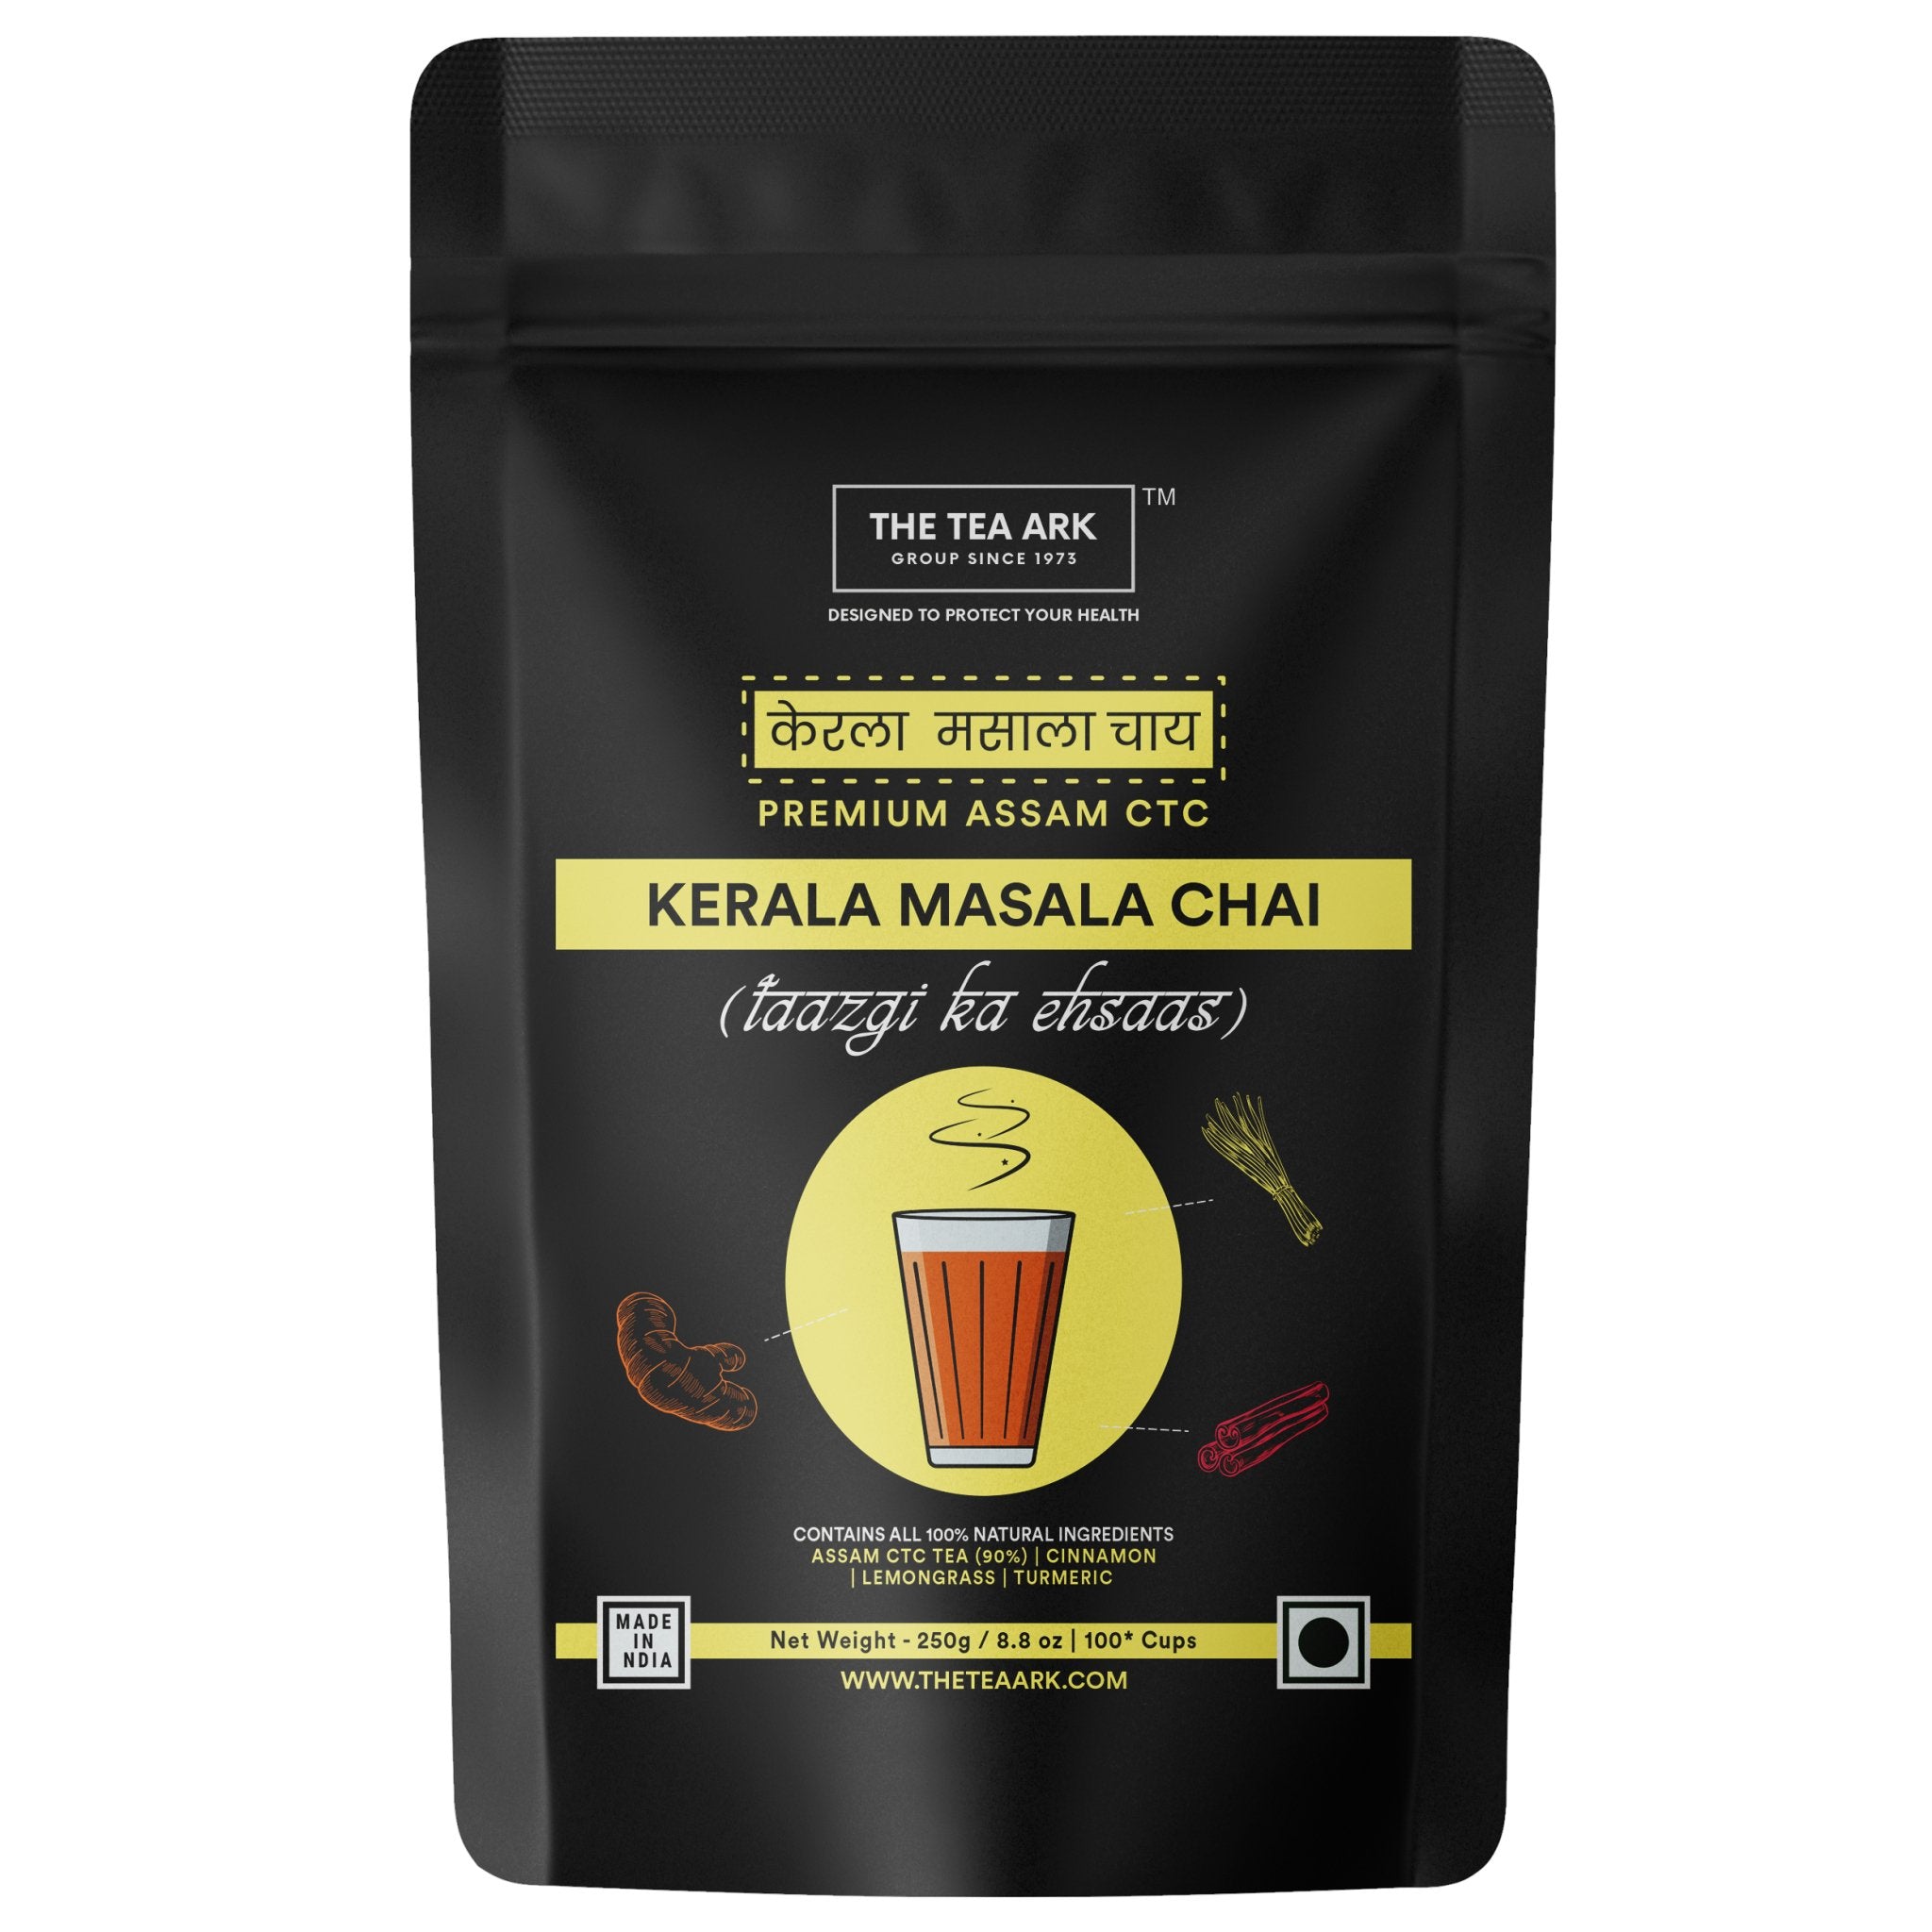 The Tea Ark Kerala Masala Chai, Taazgi Ka Ehsaas with Premium Assam CTC, 250g - Inlife Pharma Private Limited